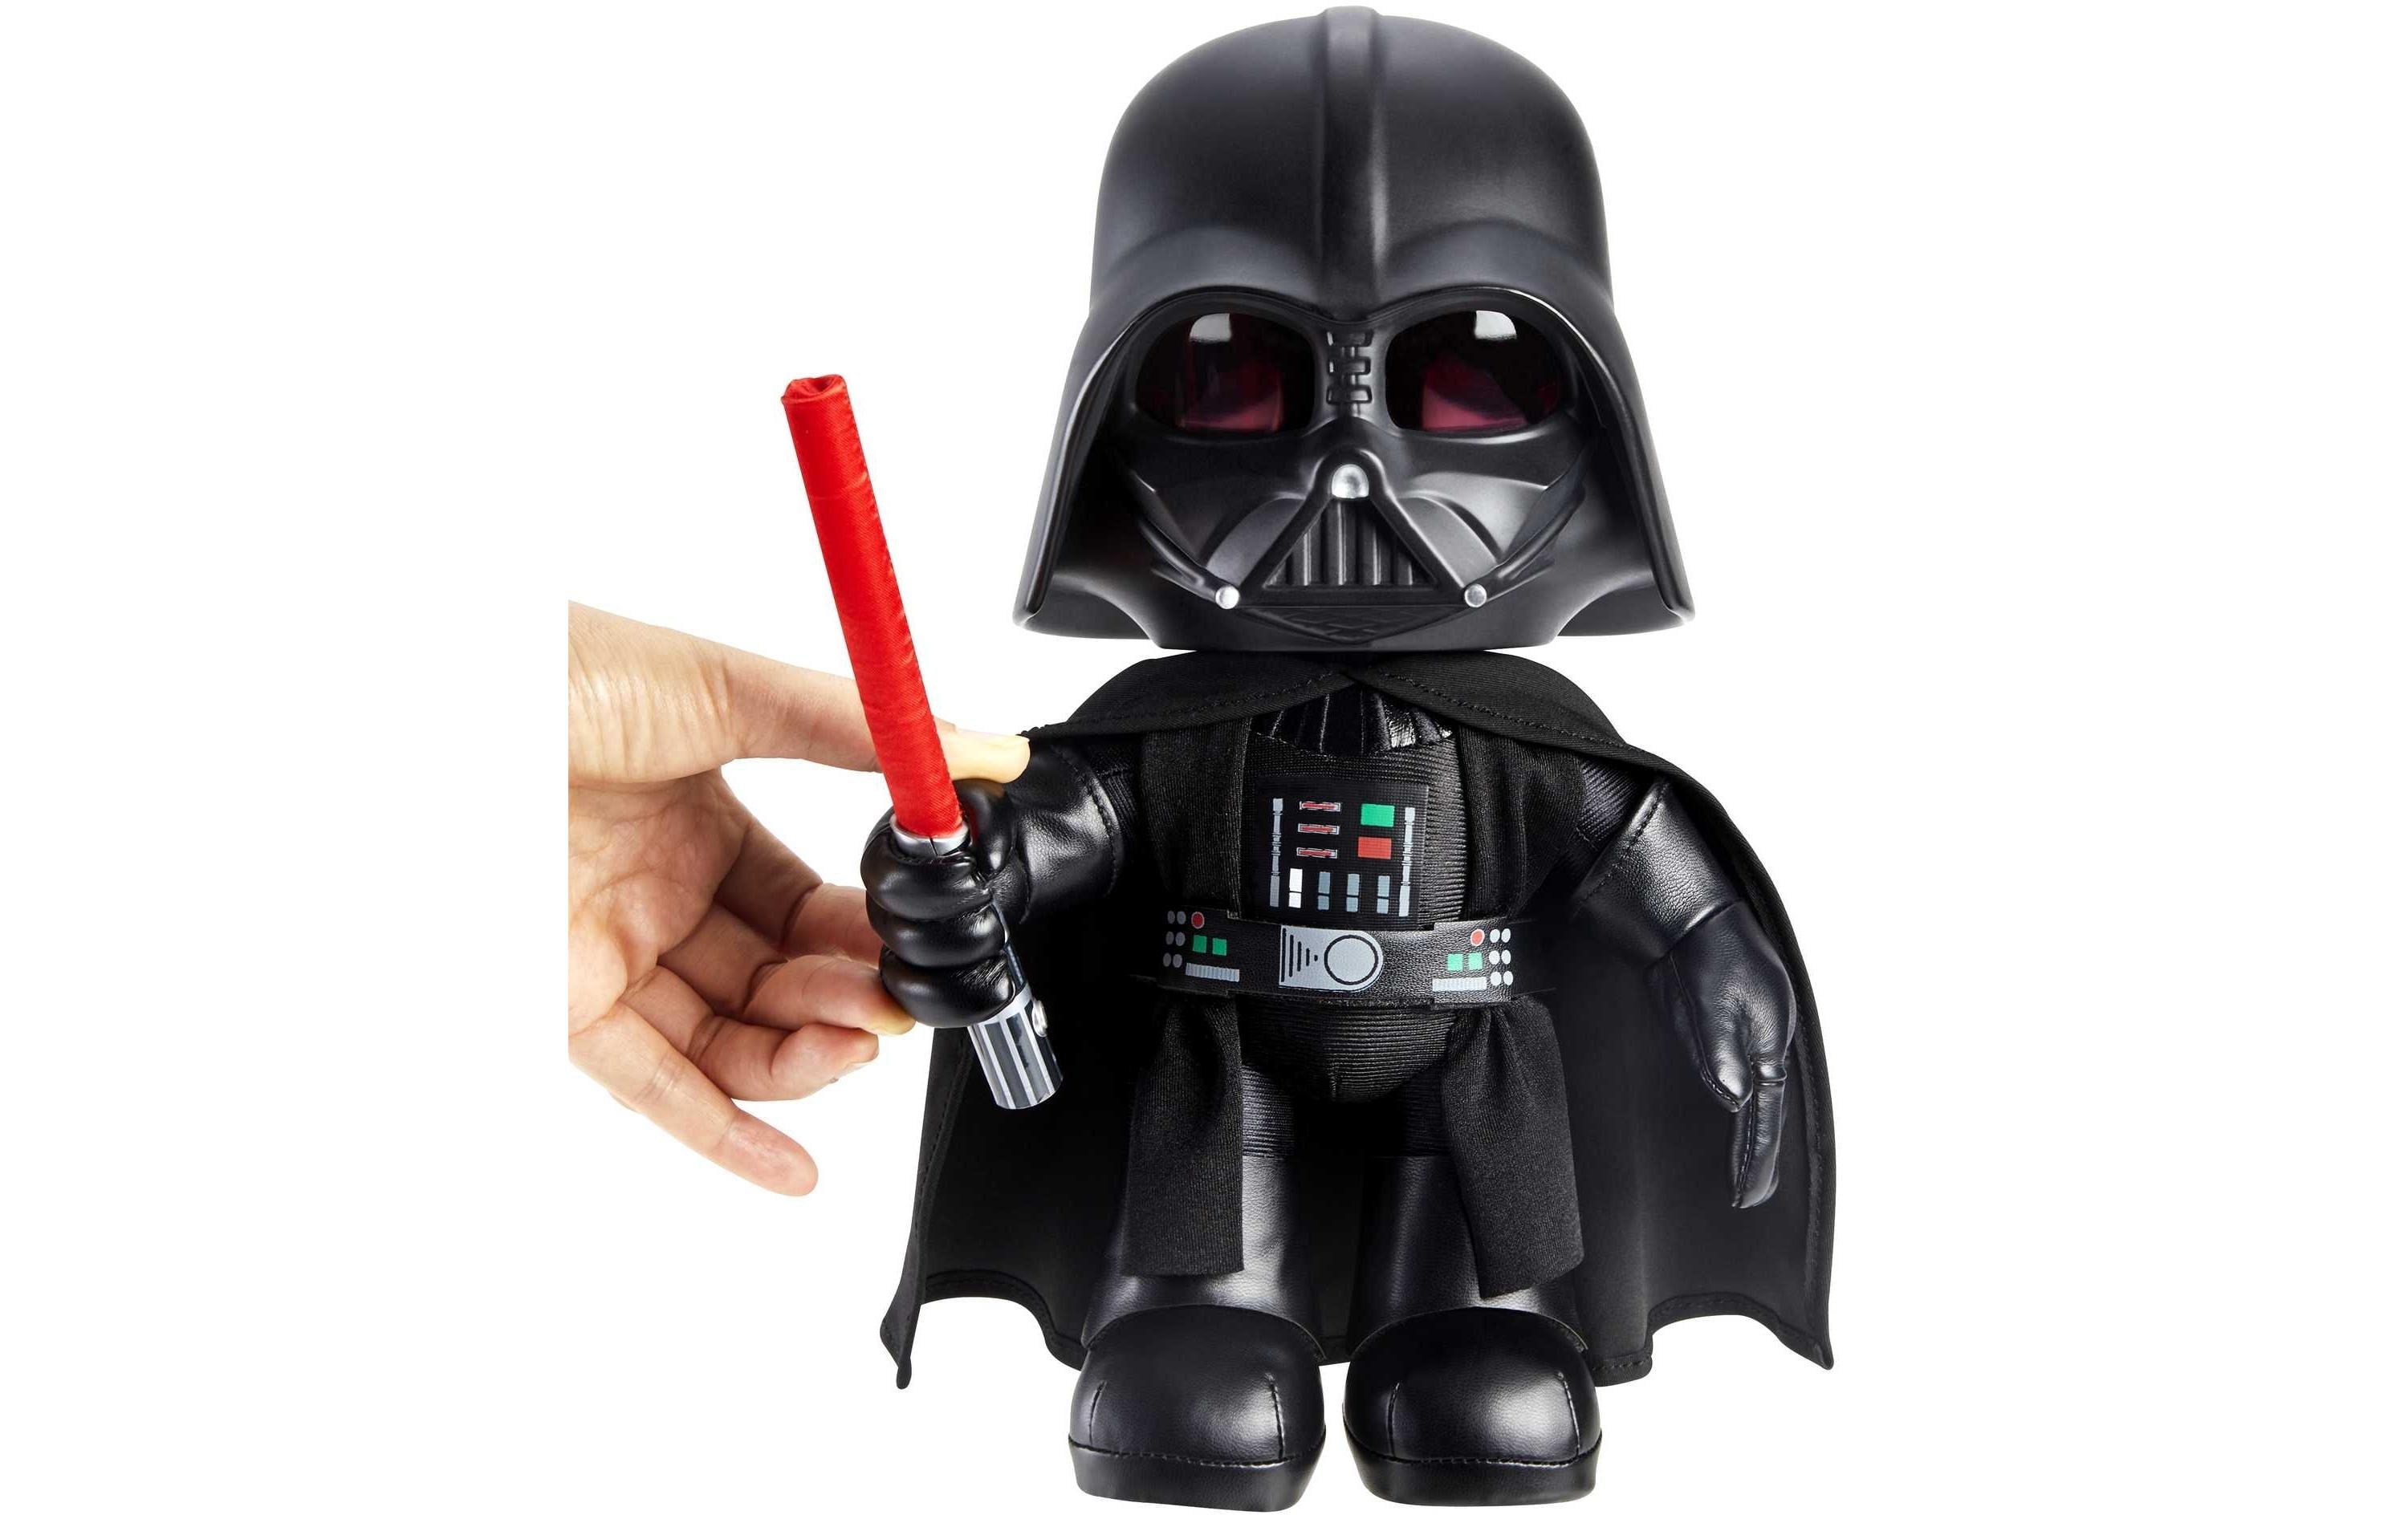 Mattel Plüsch Star Wars Darth Vader Funktionsplüsch